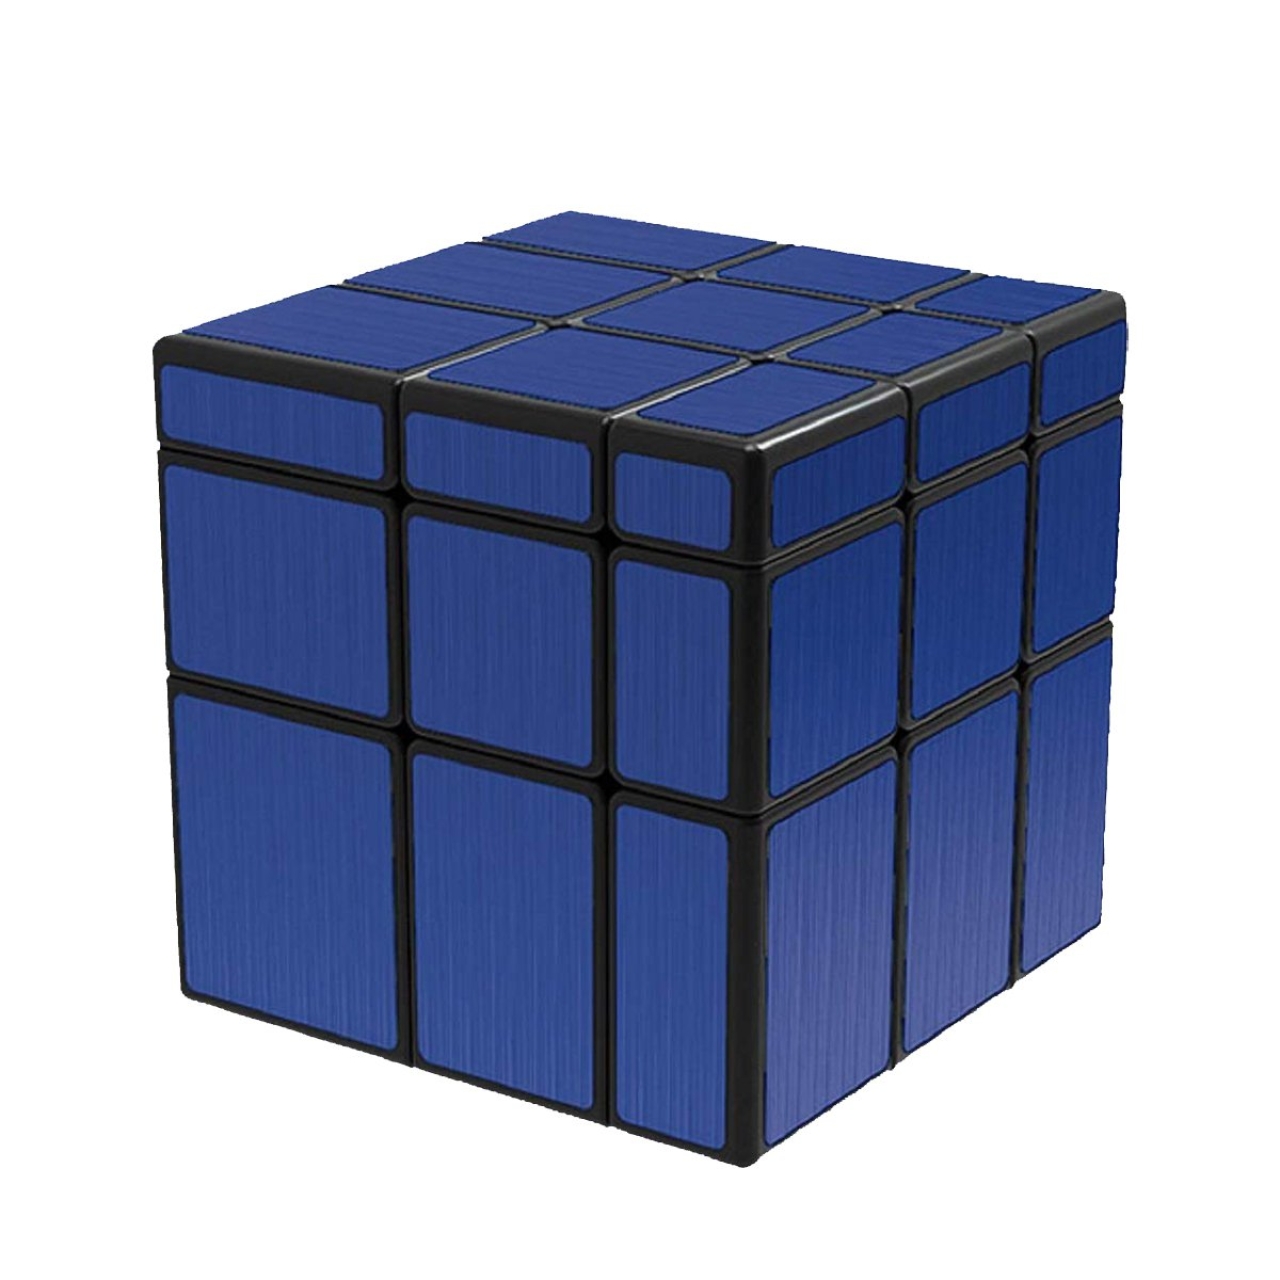 مکعب روبیک یوکسین مدل miror cube